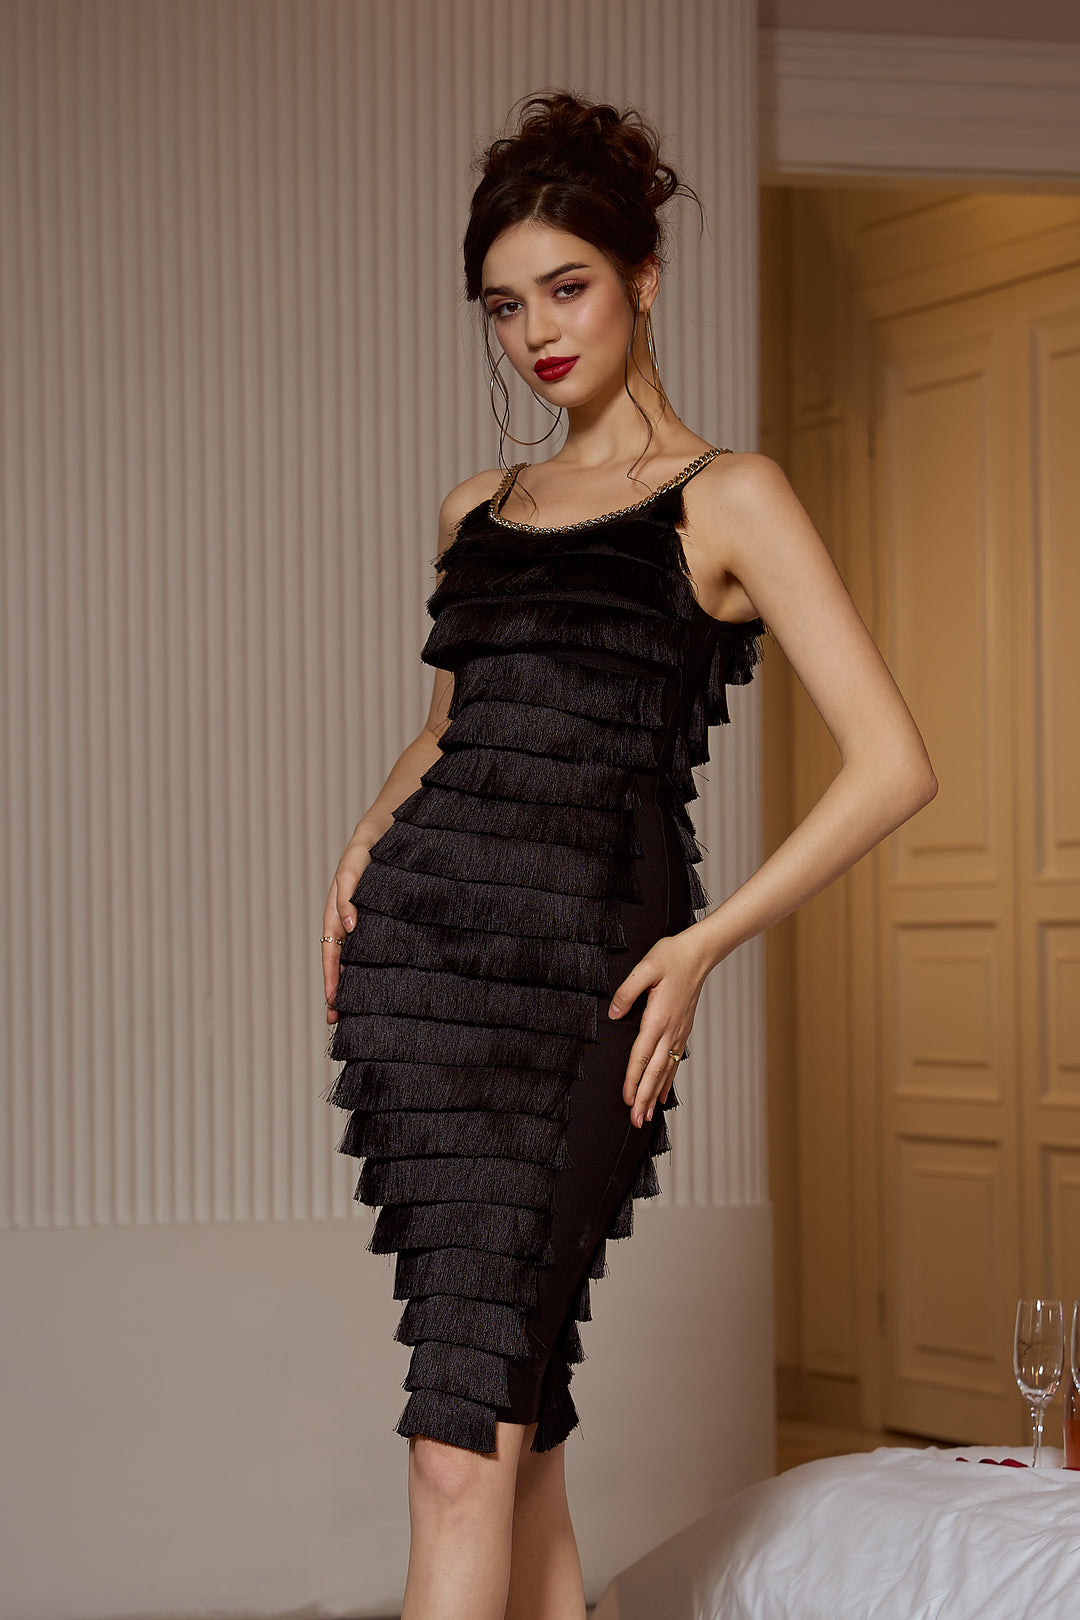 Sesidy Capri Embellished Strap Black Fringe Dress in Black